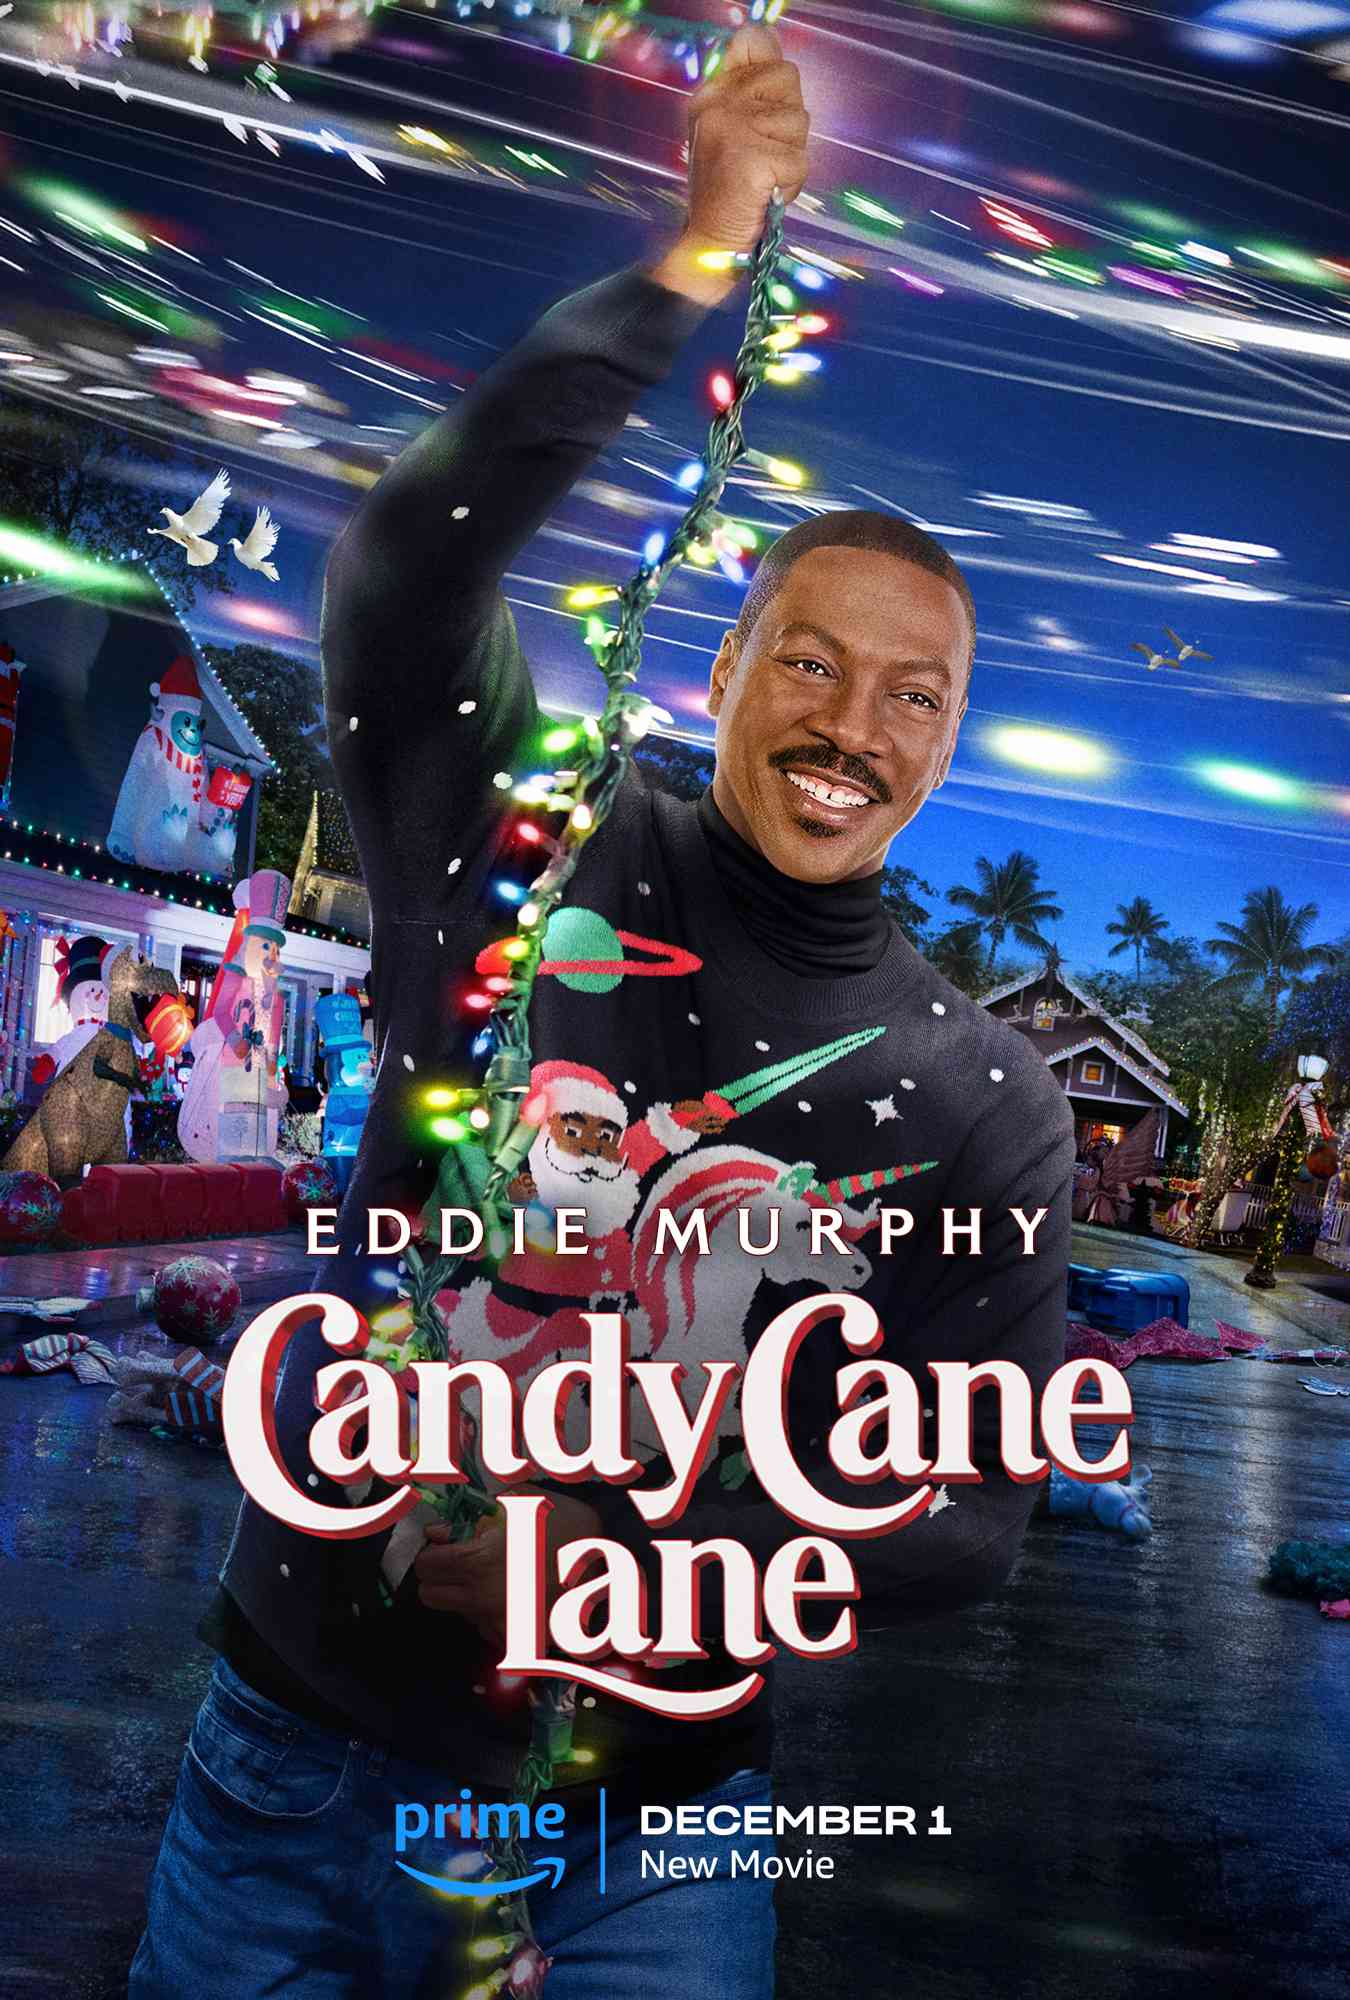 Eddie Murphy's Holiday Movie 'Candy Cane Lane' | Fab.ng